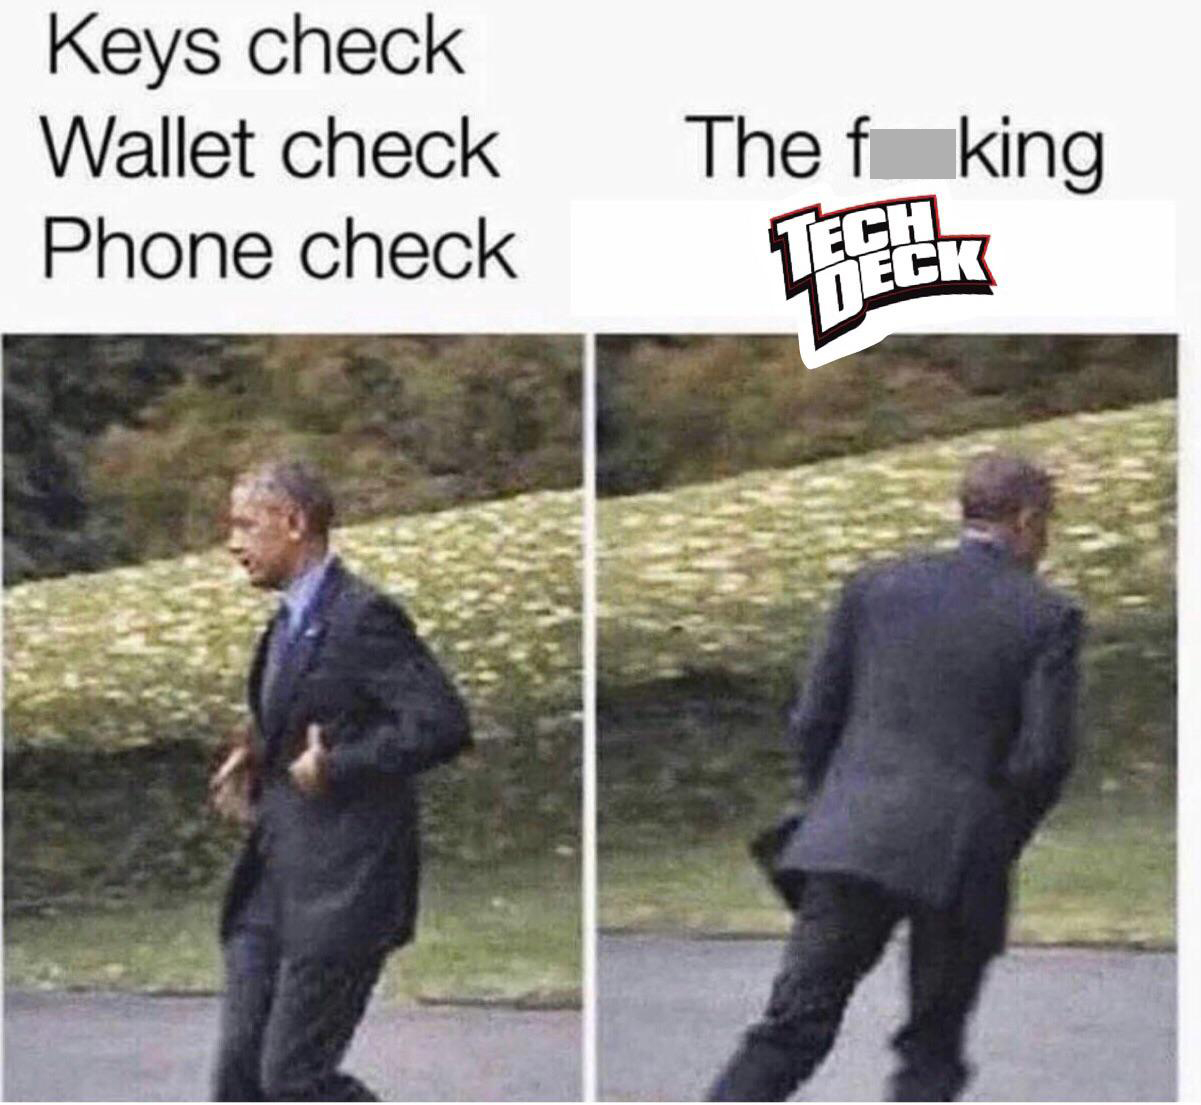 funny memes - dank memes - twisted tea meme - Keys check Wallet check Phone check The f king Tech